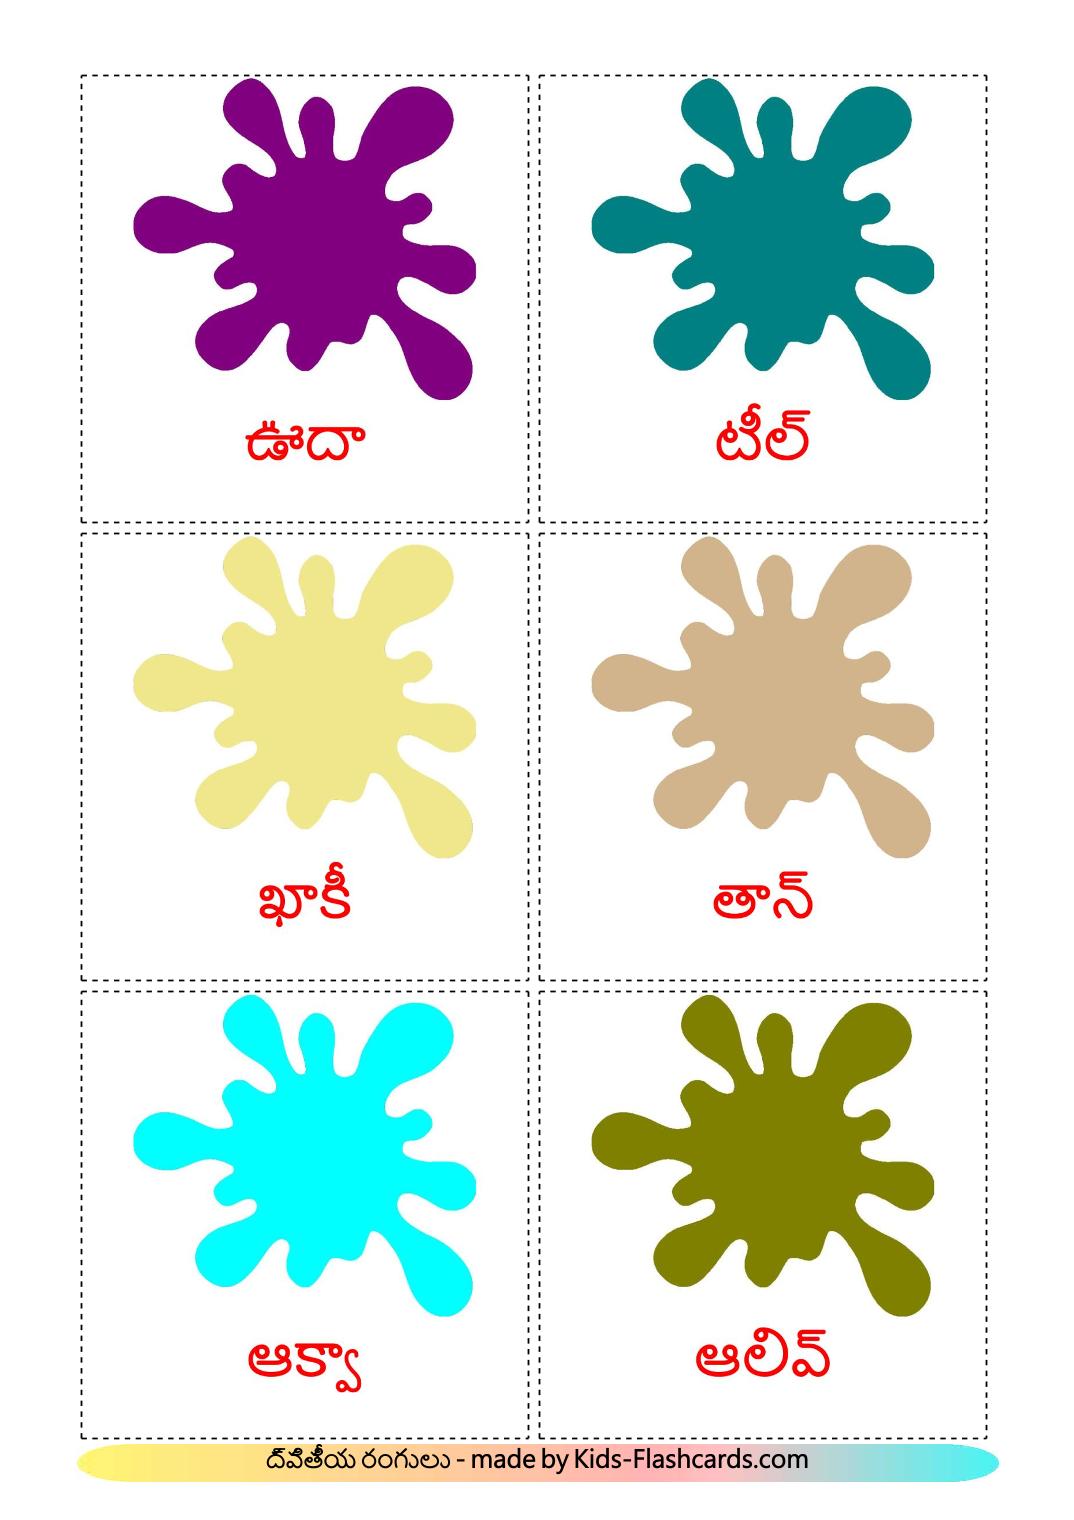 Secondary colors - 20 Free Printable telugu Flashcards 